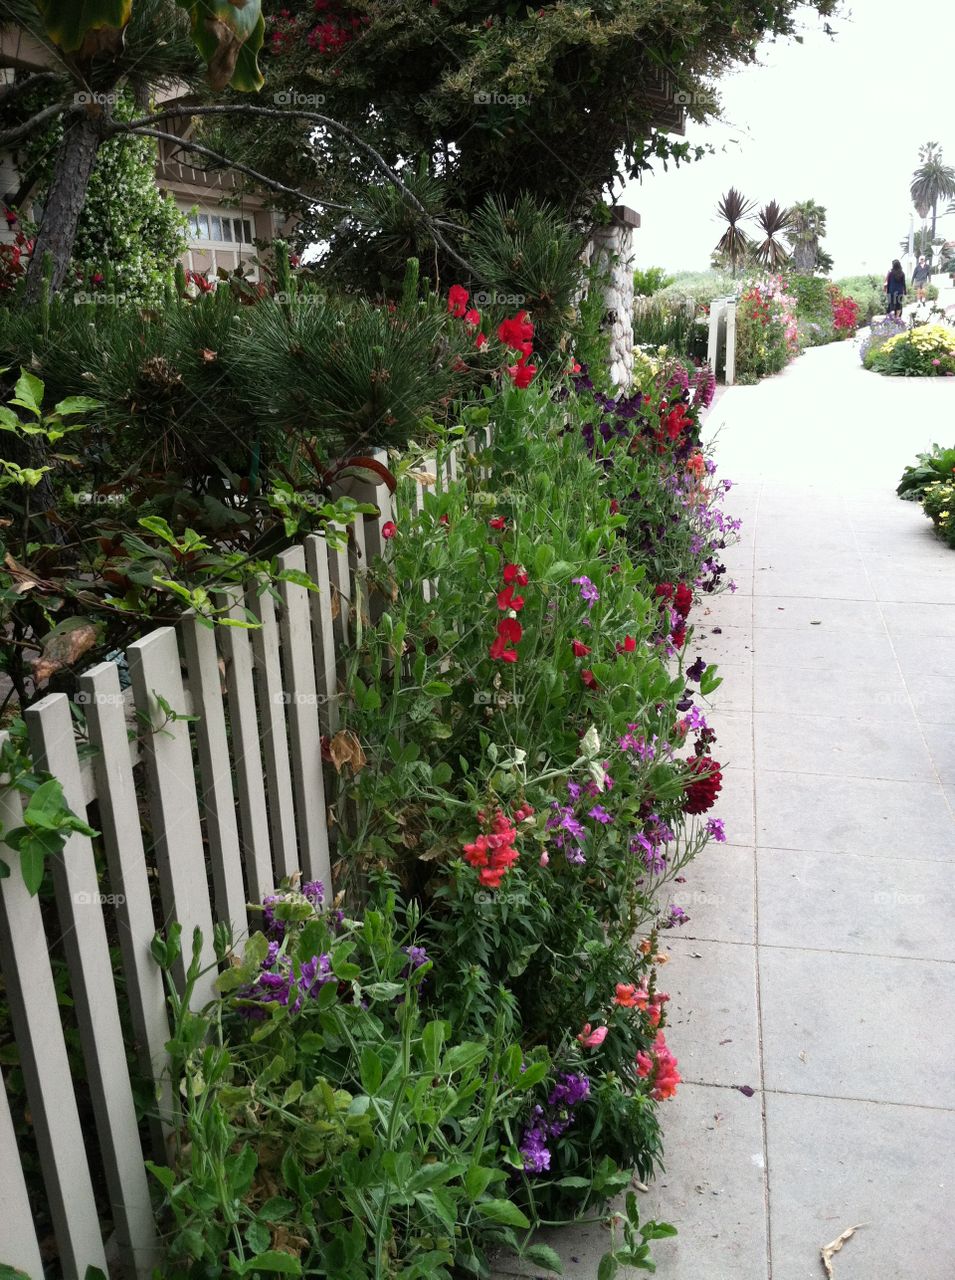 Garden walk. Picket fence on sidewalk with flowers